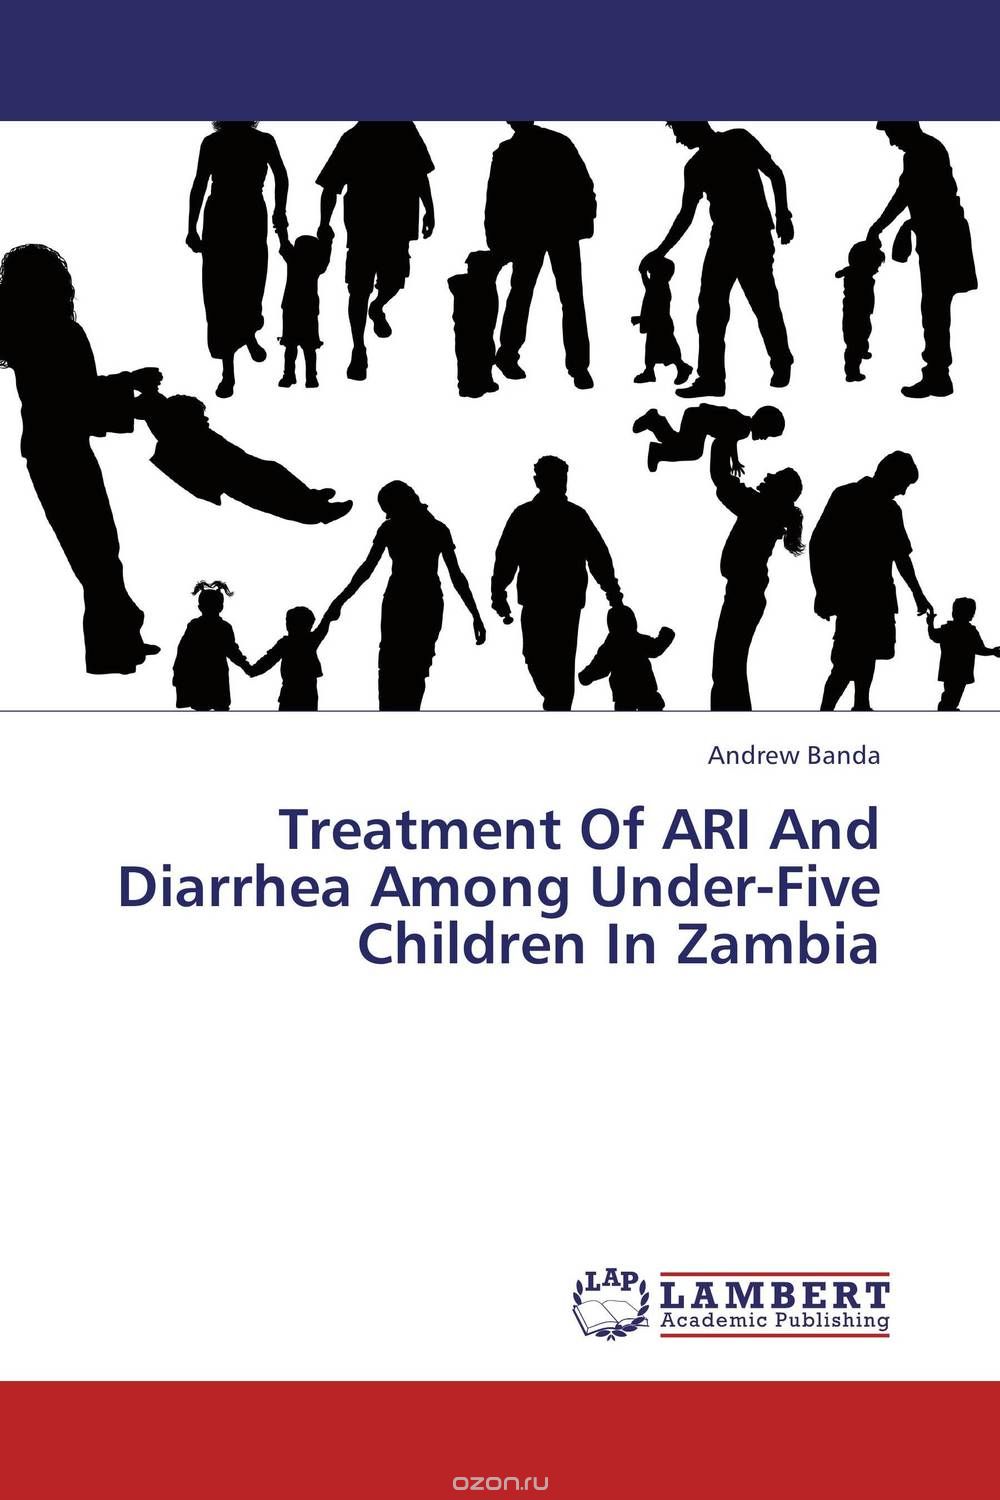 Скачать книгу "Treatment Of ARI And Diarrhea Among Under-Five Children In Zambia"